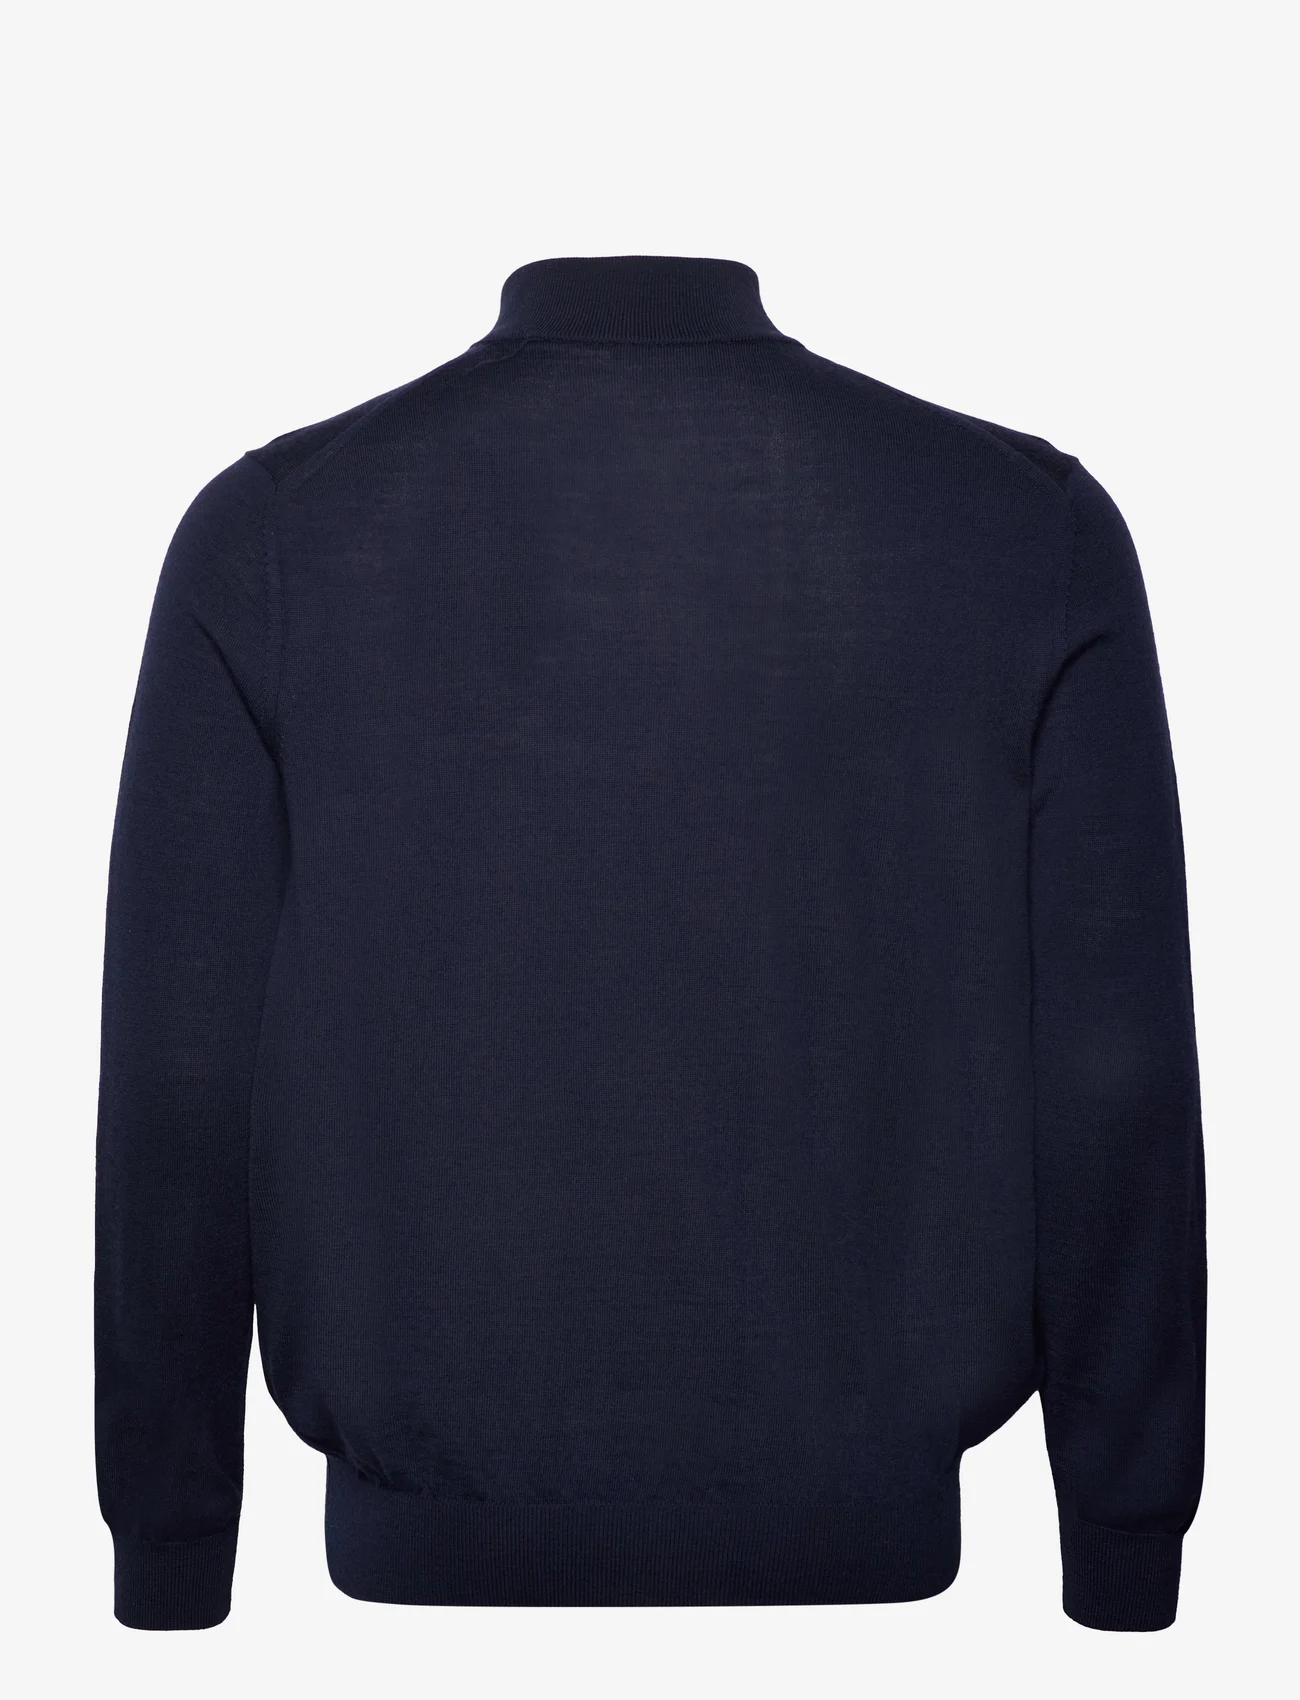 Mango - 100% merino wool sweater with zip collar - miesten - navy - 1